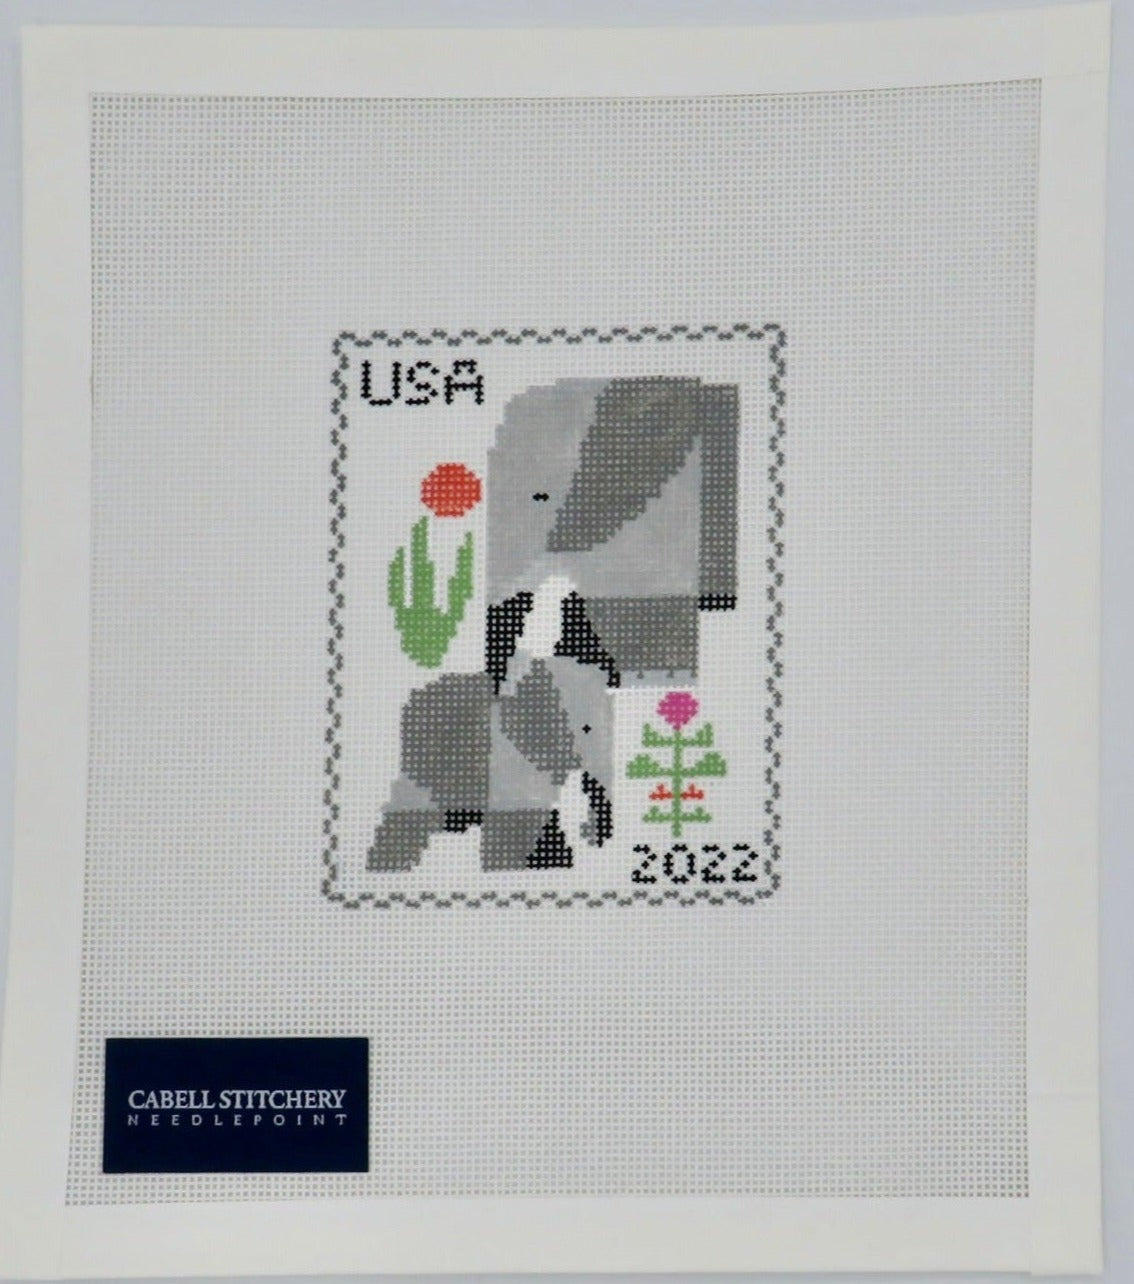 Forever Stamp Ornament - Elephant